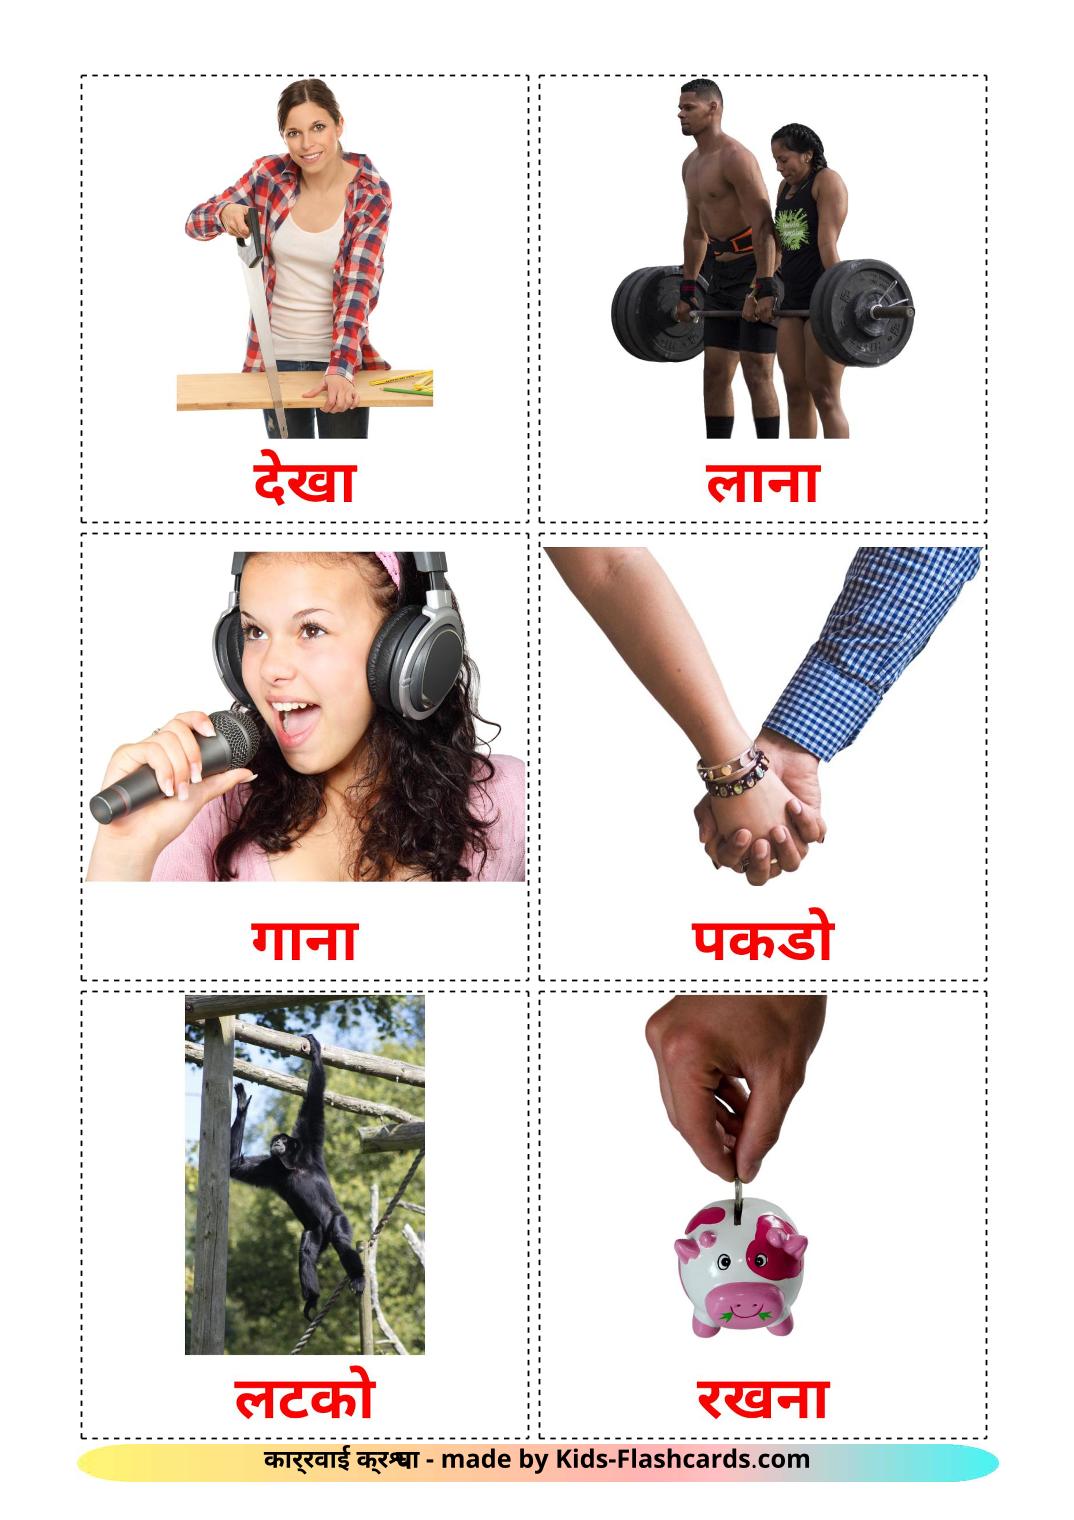 Aktionsverben - 51 kostenlose, druckbare Hindi Flashcards 